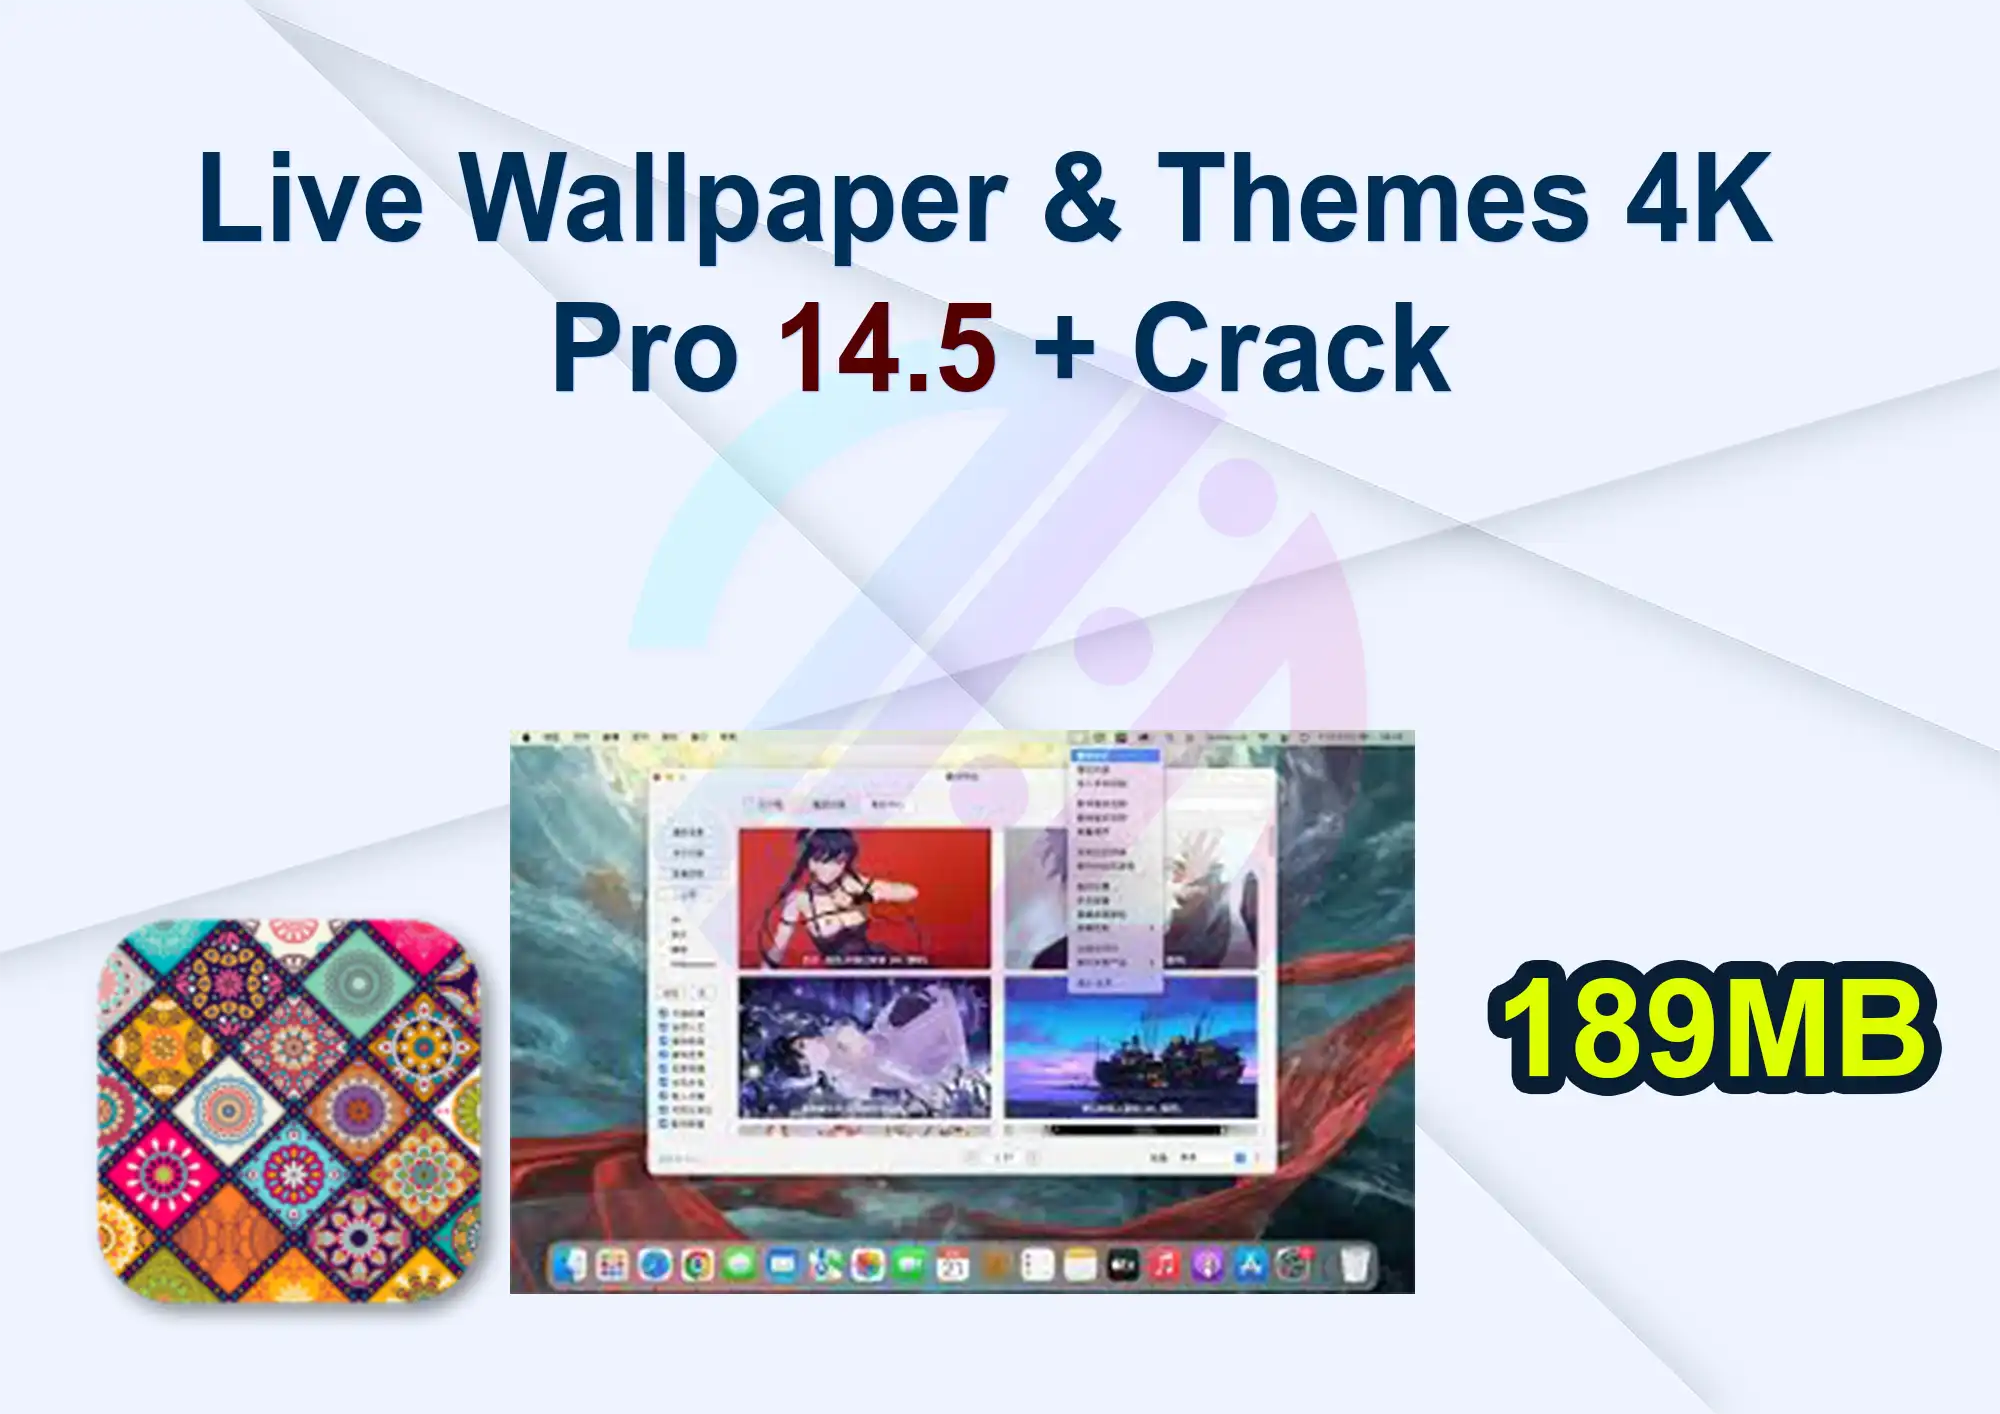 Live Wallpaper & Themes 4K Pro 14.5 + Crack